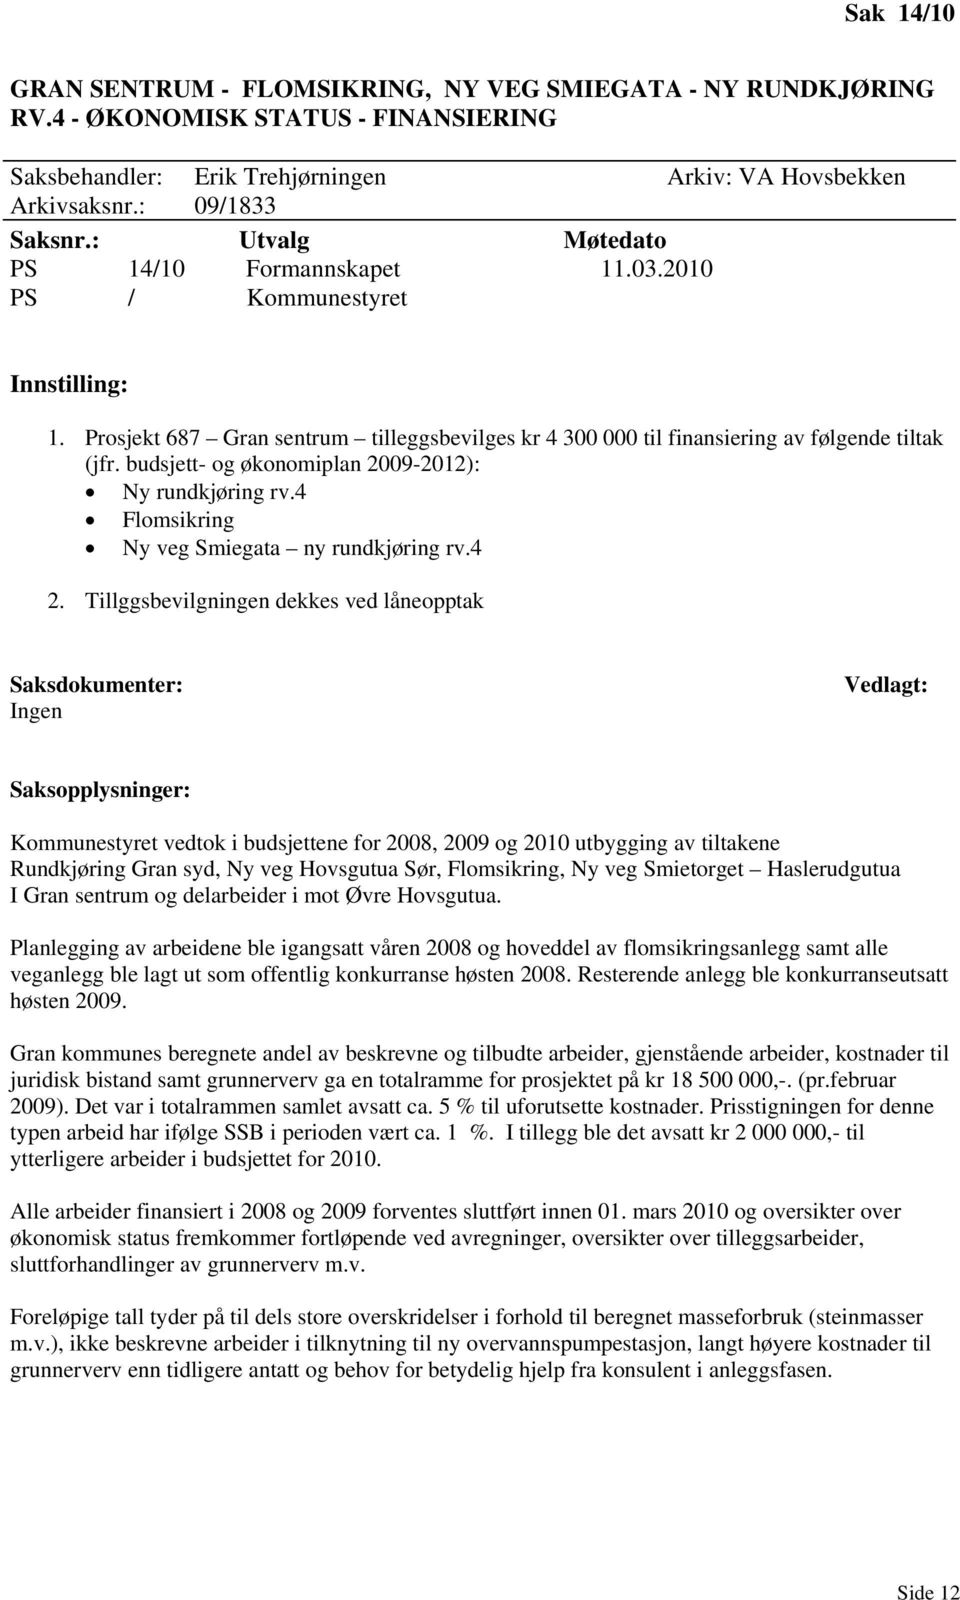 budsjett- og økonomiplan 2009-2012): Ny rundkjøring rv.4 Flomsikring Ny veg Smiegata ny rundkjøring rv.4 2.